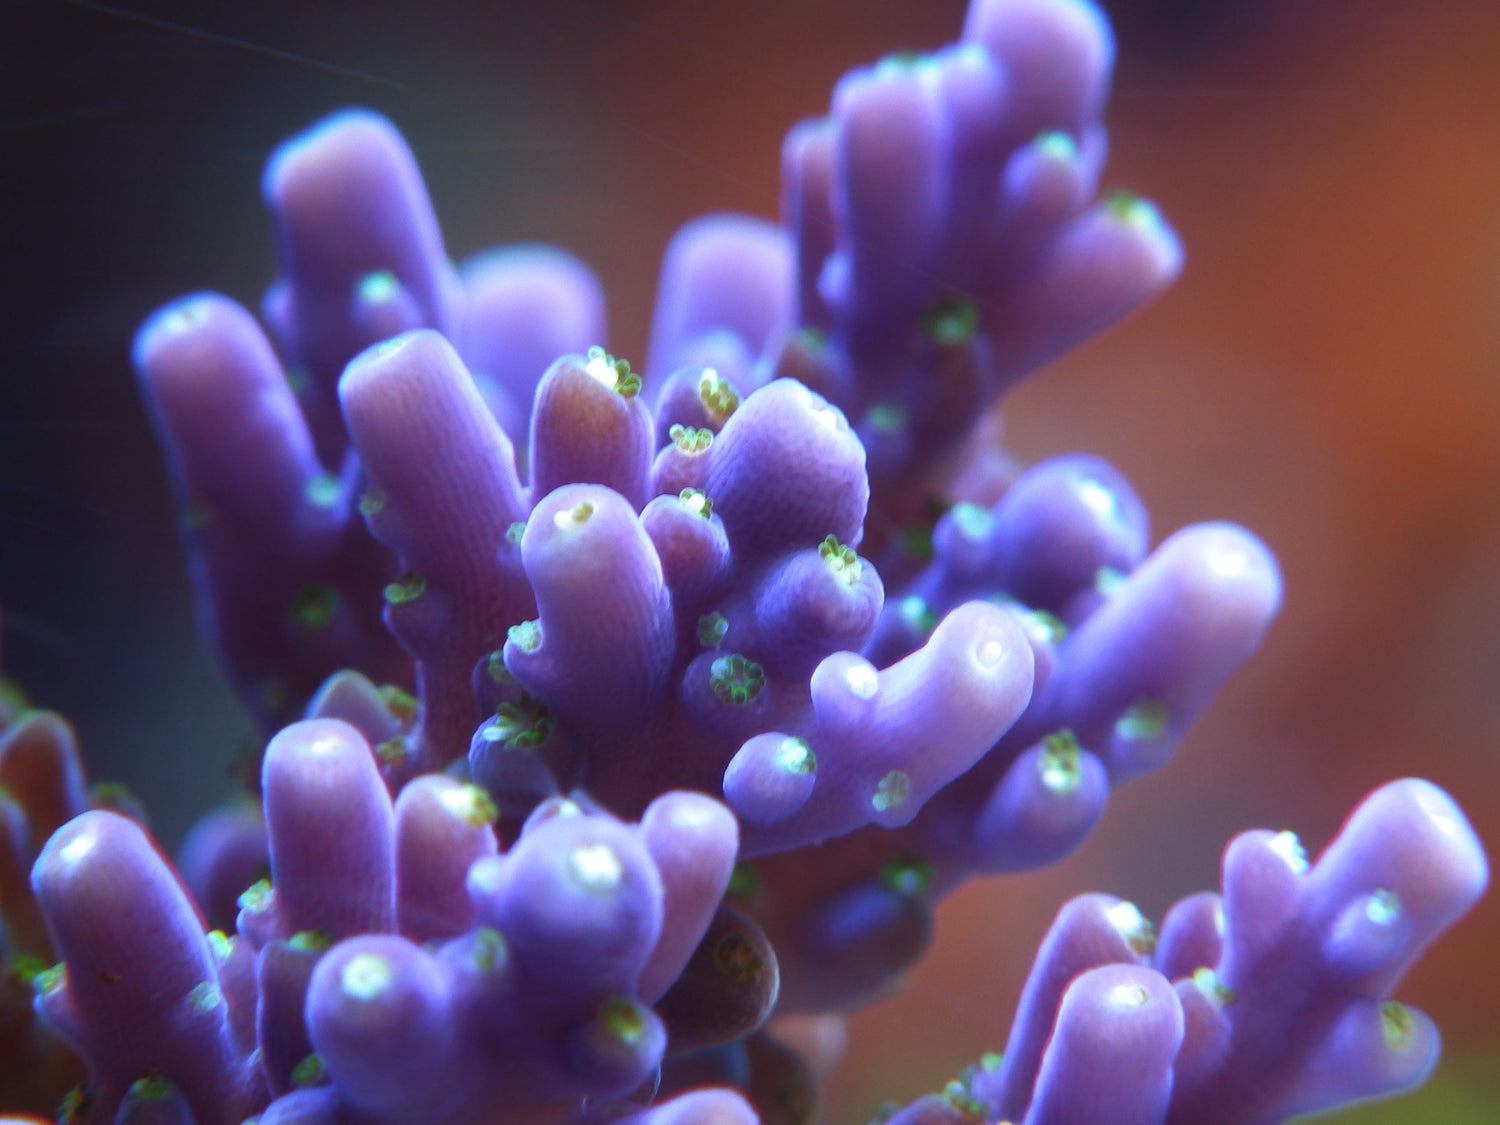 Acropora - Royal Reef